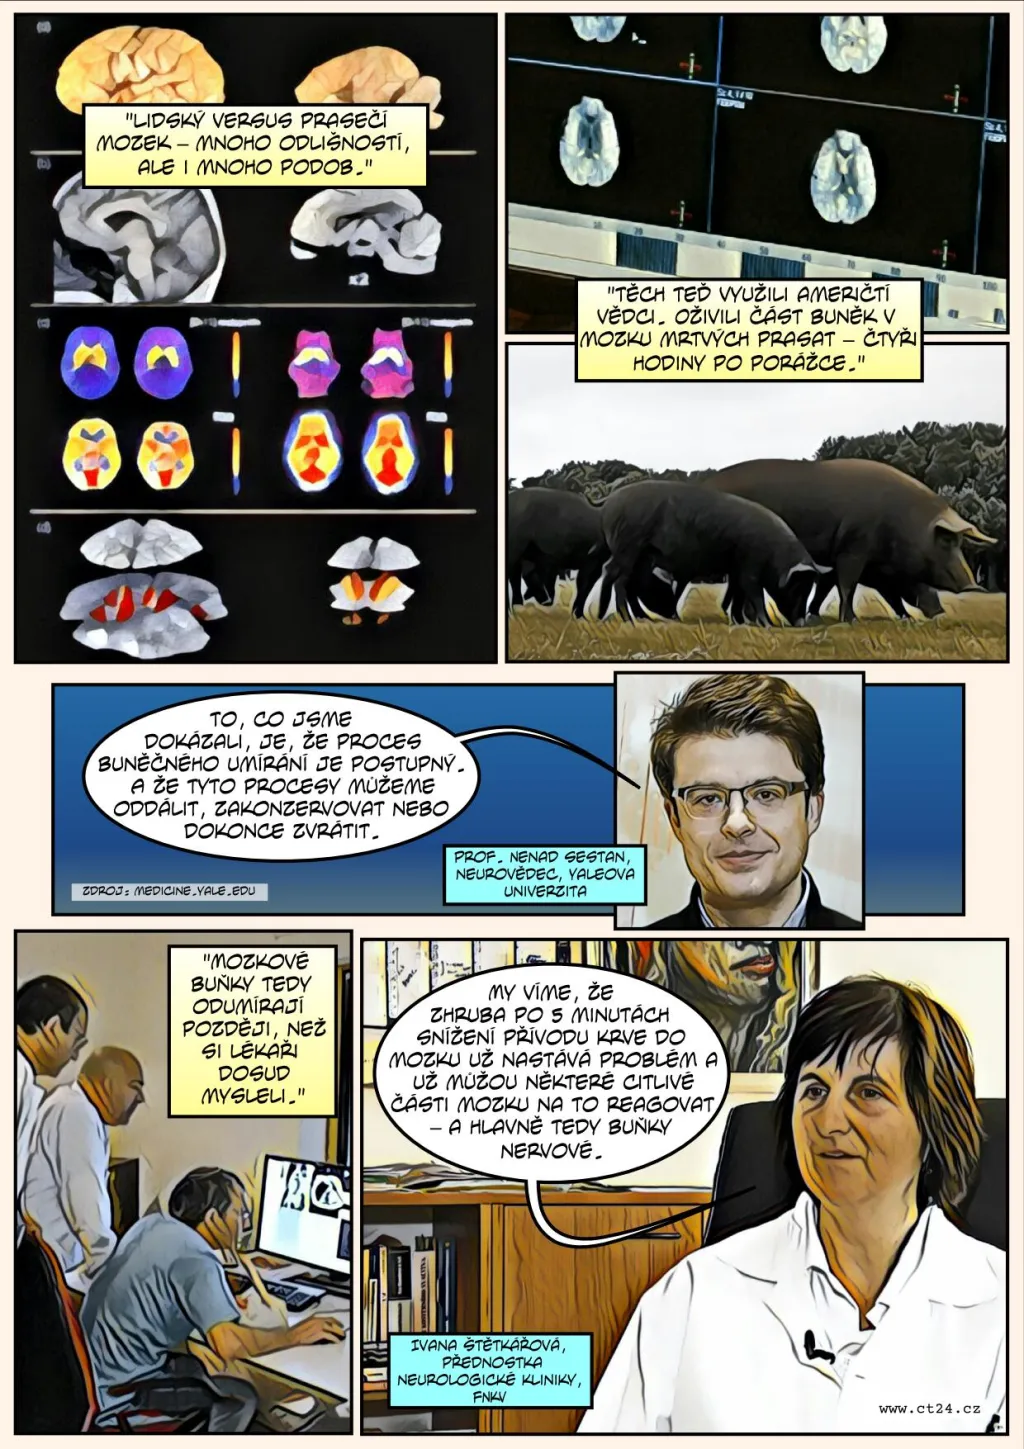 Komiks: Vědci oživili mozky